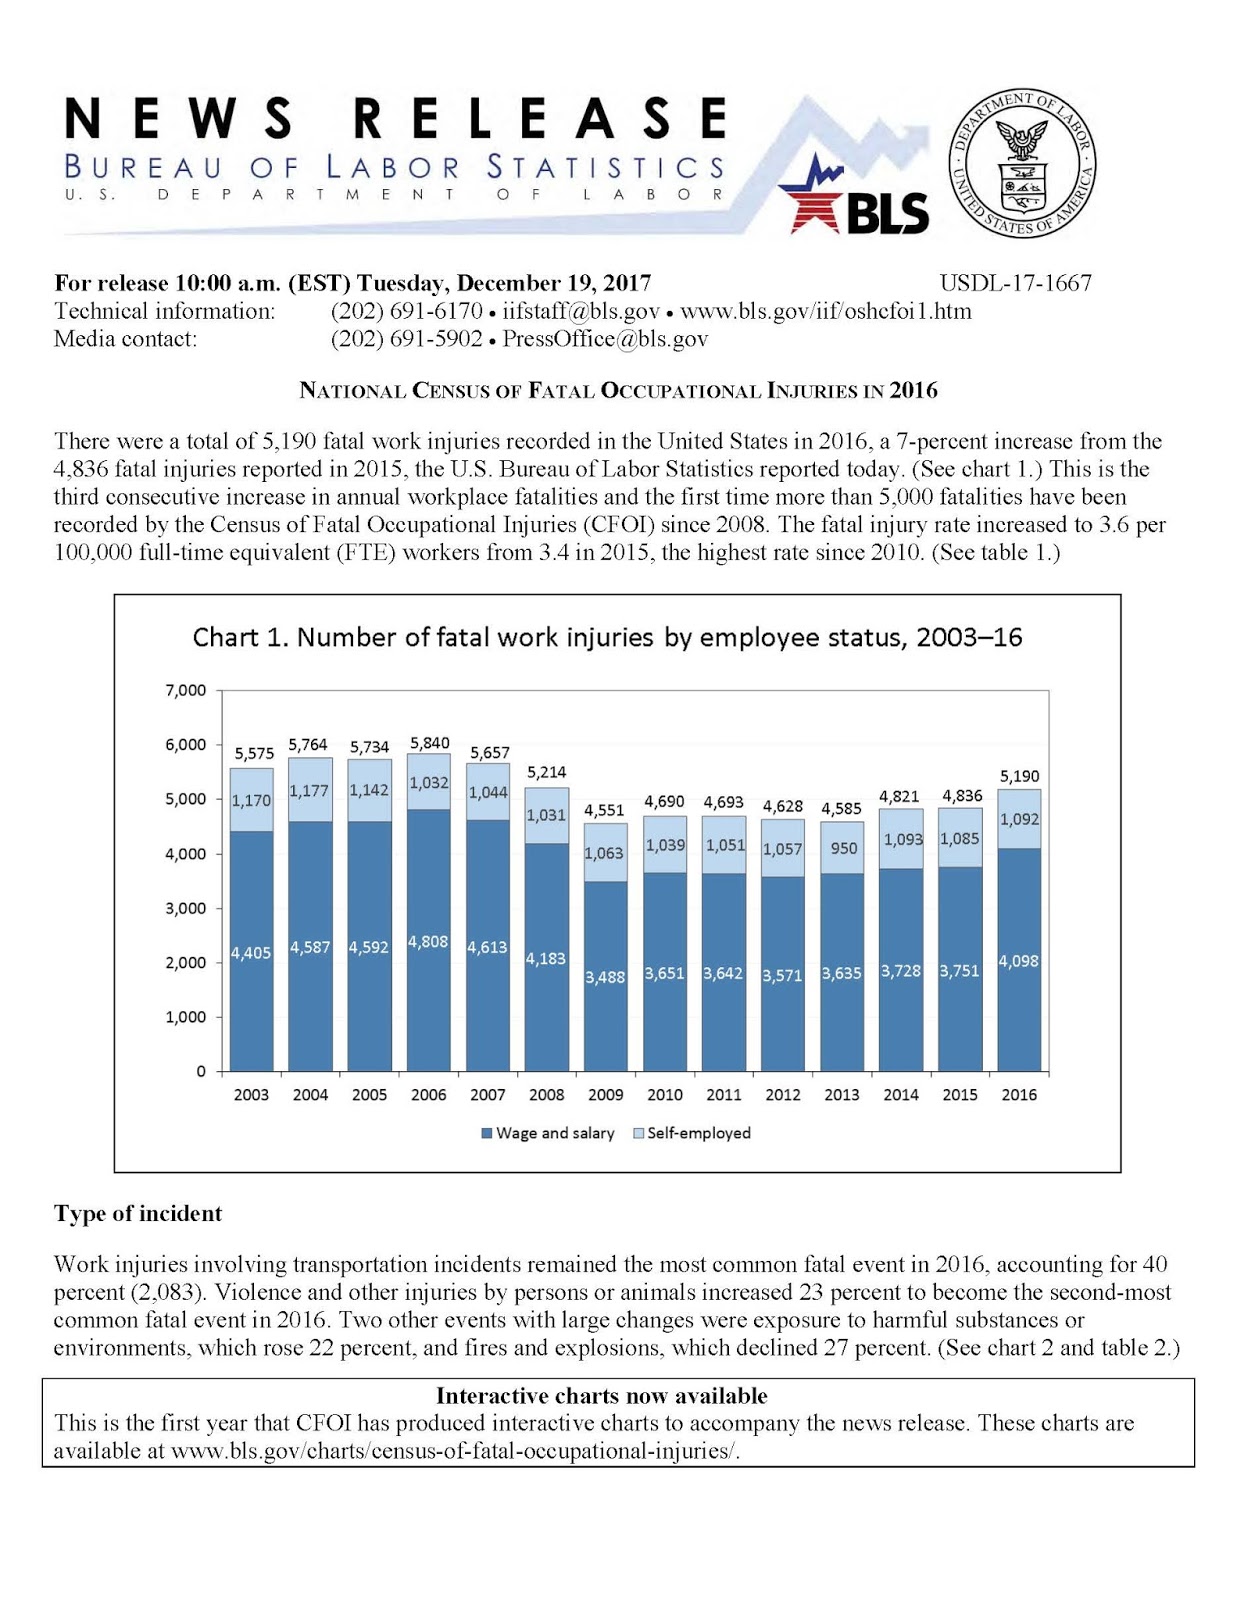 Ehsinc Blog U S Department Of Labor Bureau Of Labor Statistics National Census Of Fatal Occupational Injuries In 2016